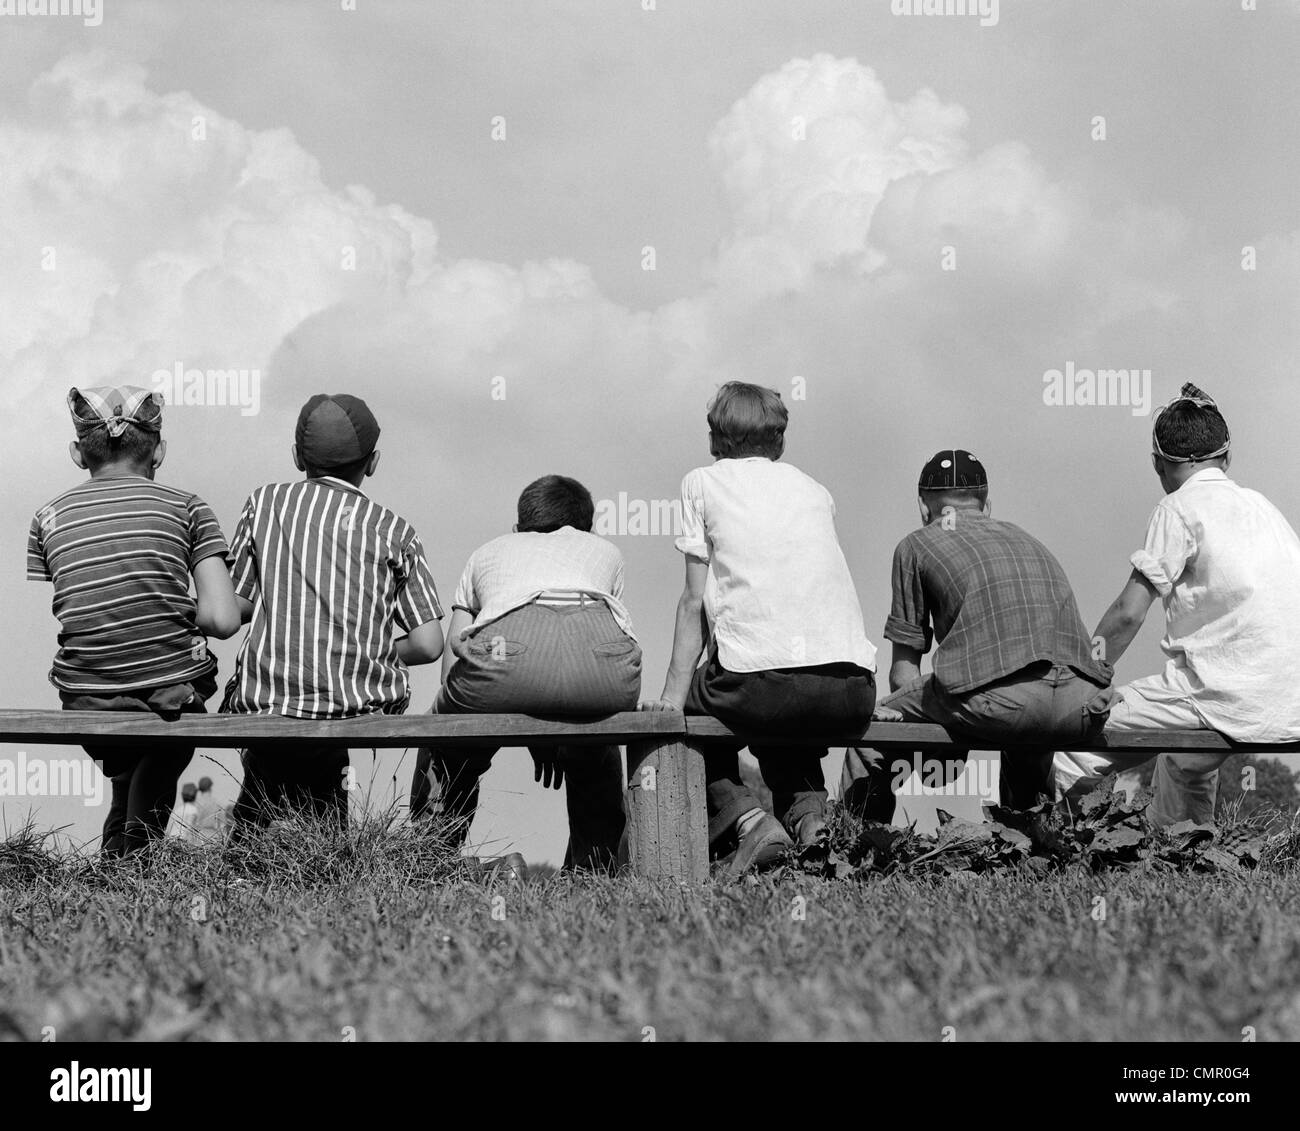 1960s BACK VIEW OF SIX BOY BASEBALL PLAYERS SITTING ON BENCH Stock Photo